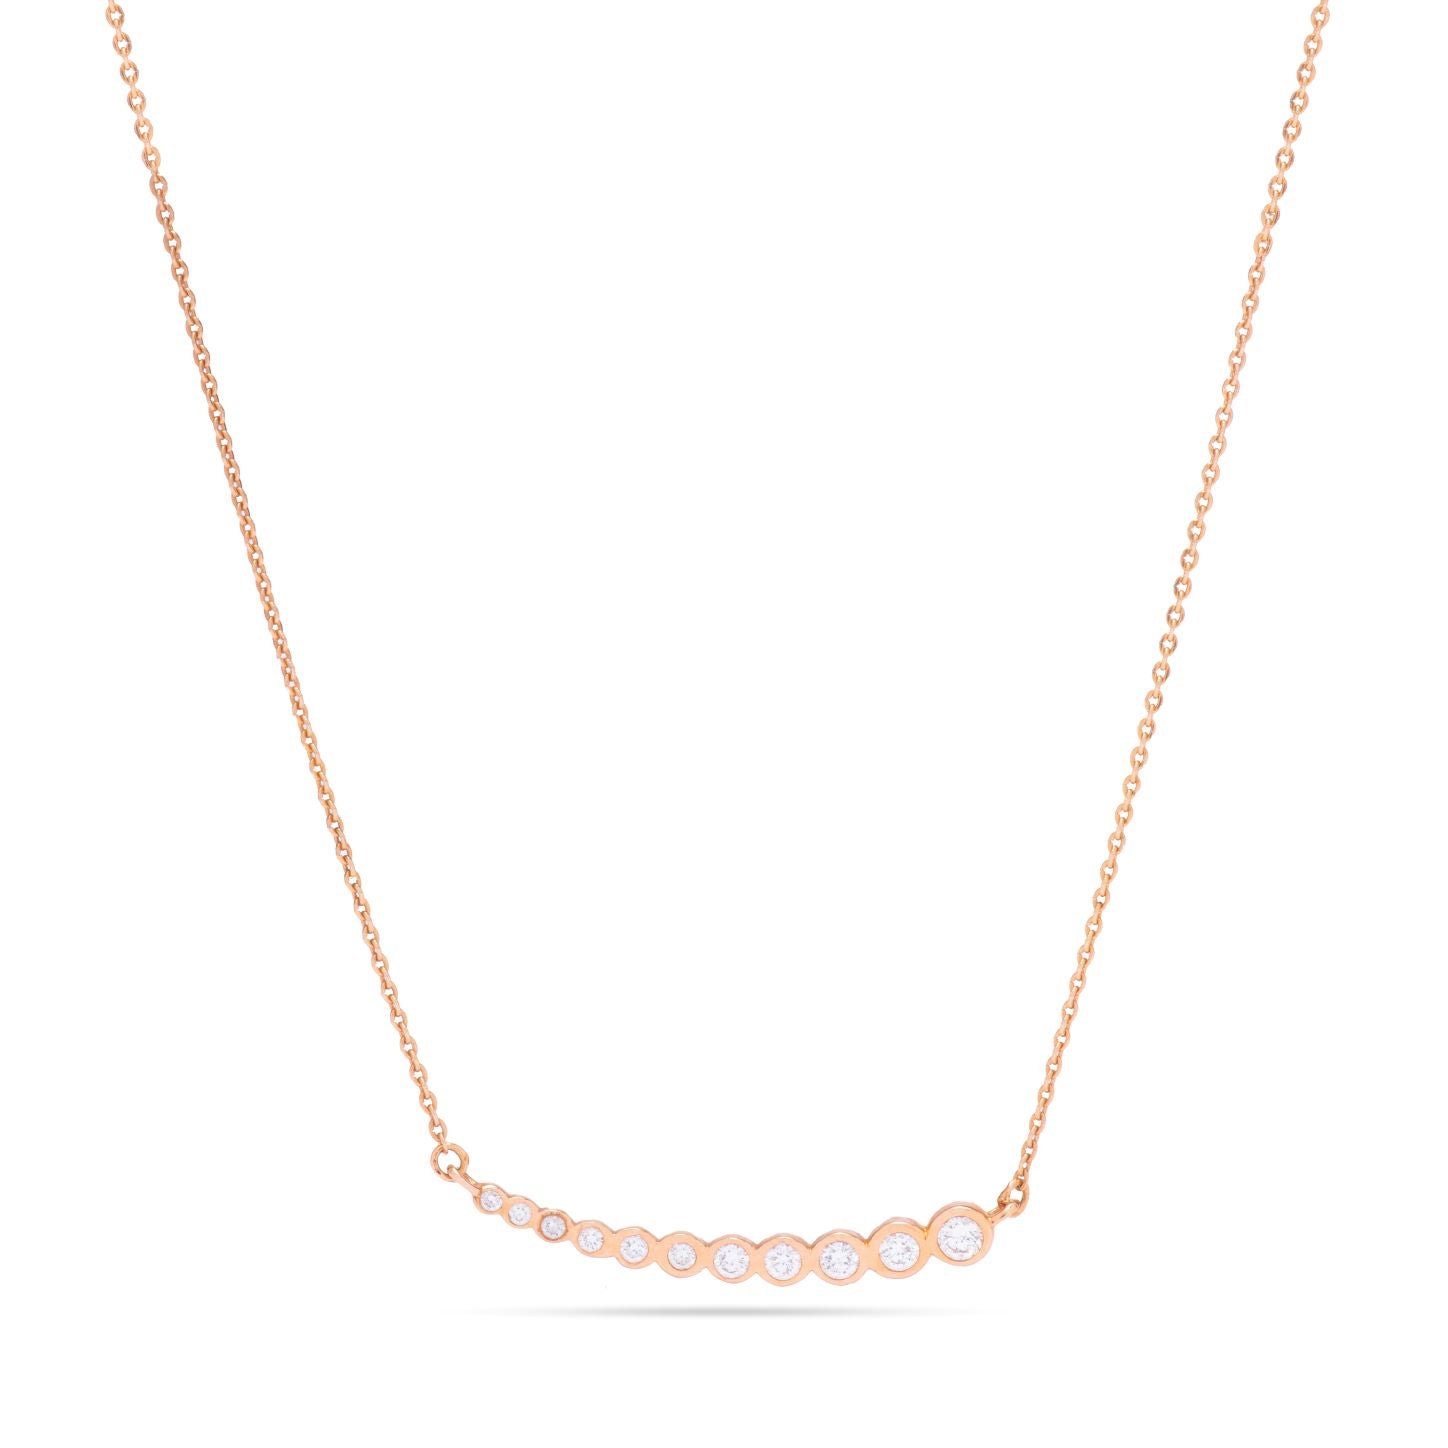 Diamond 18k rose gold necklace - SIR1330